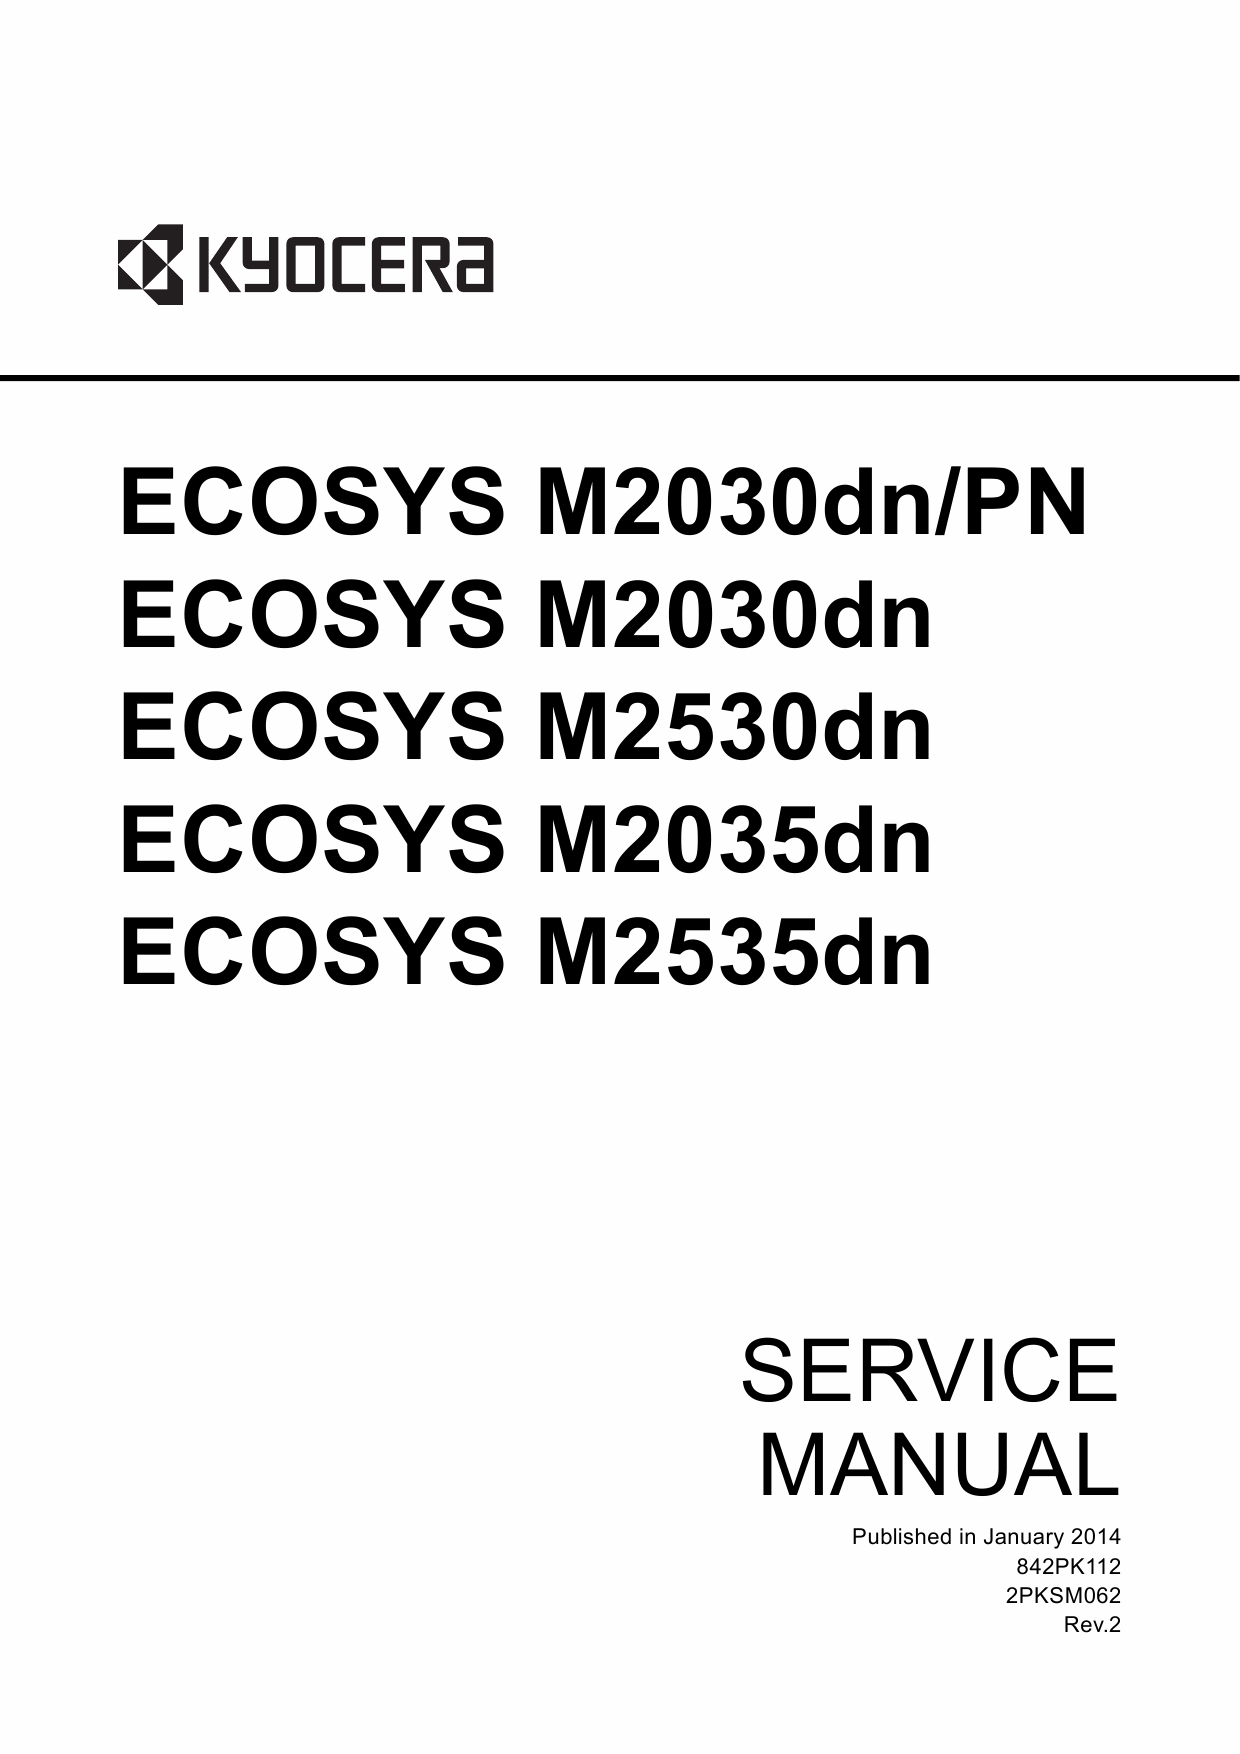 KYOCERA MFP ECOSYS-M2030dn M2530dn M2035dn M2535dn Service Manual-1